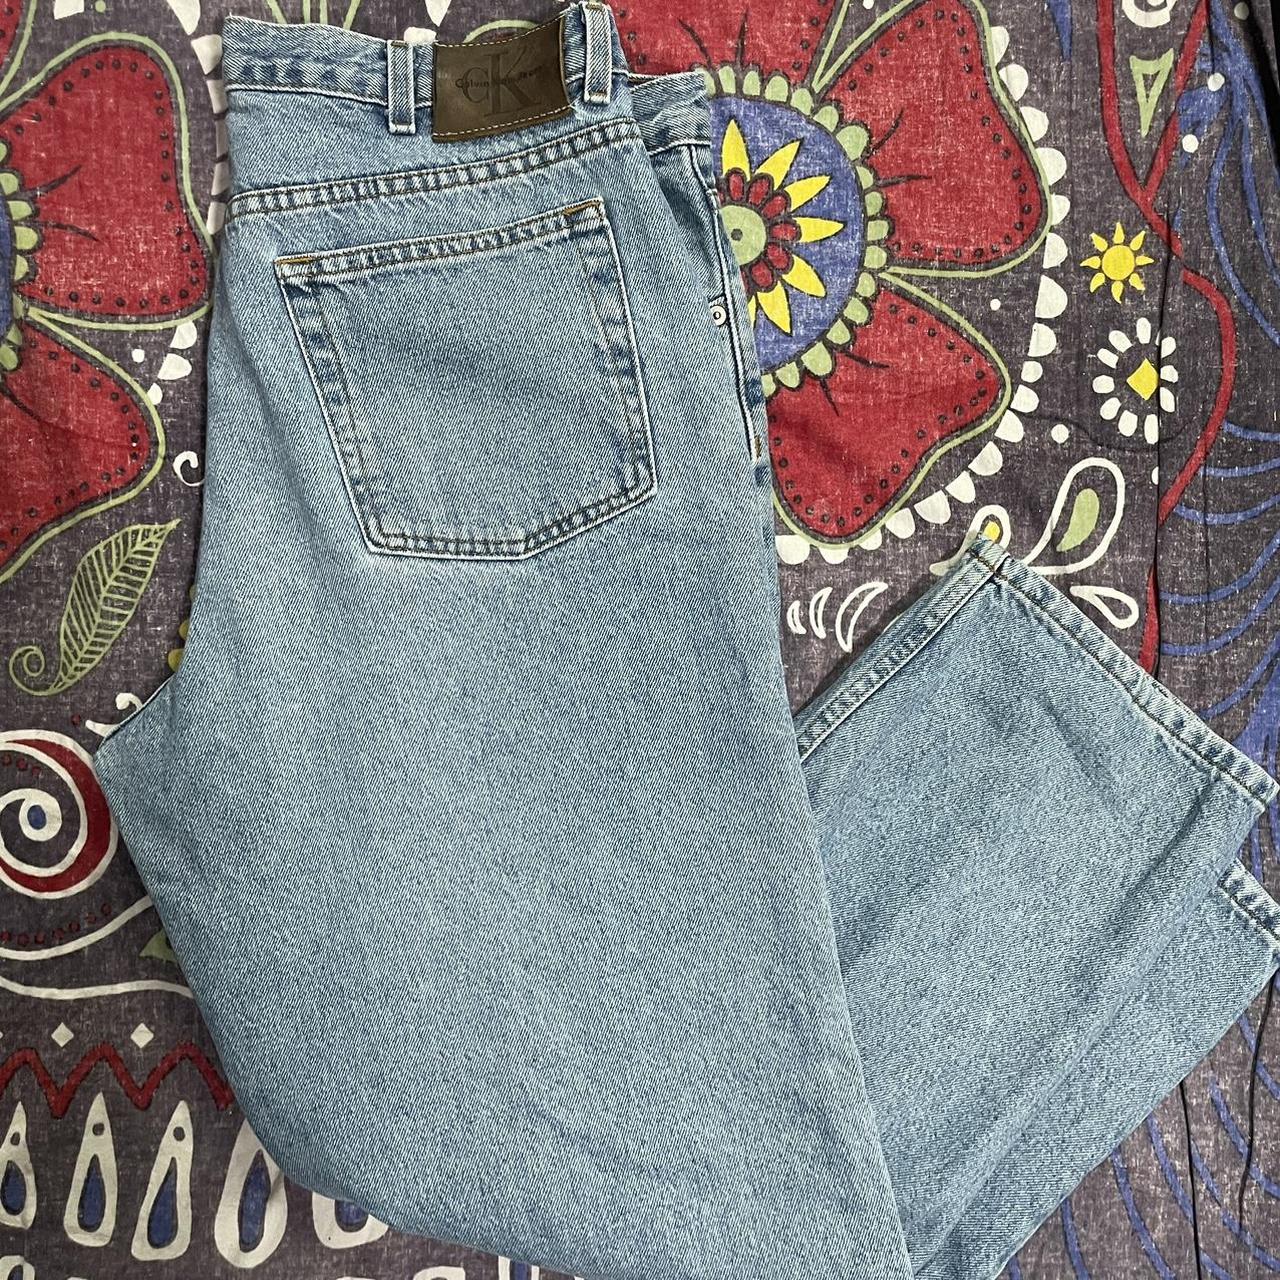 Calvin Klein jeans Great condition Size 38x30 - Depop